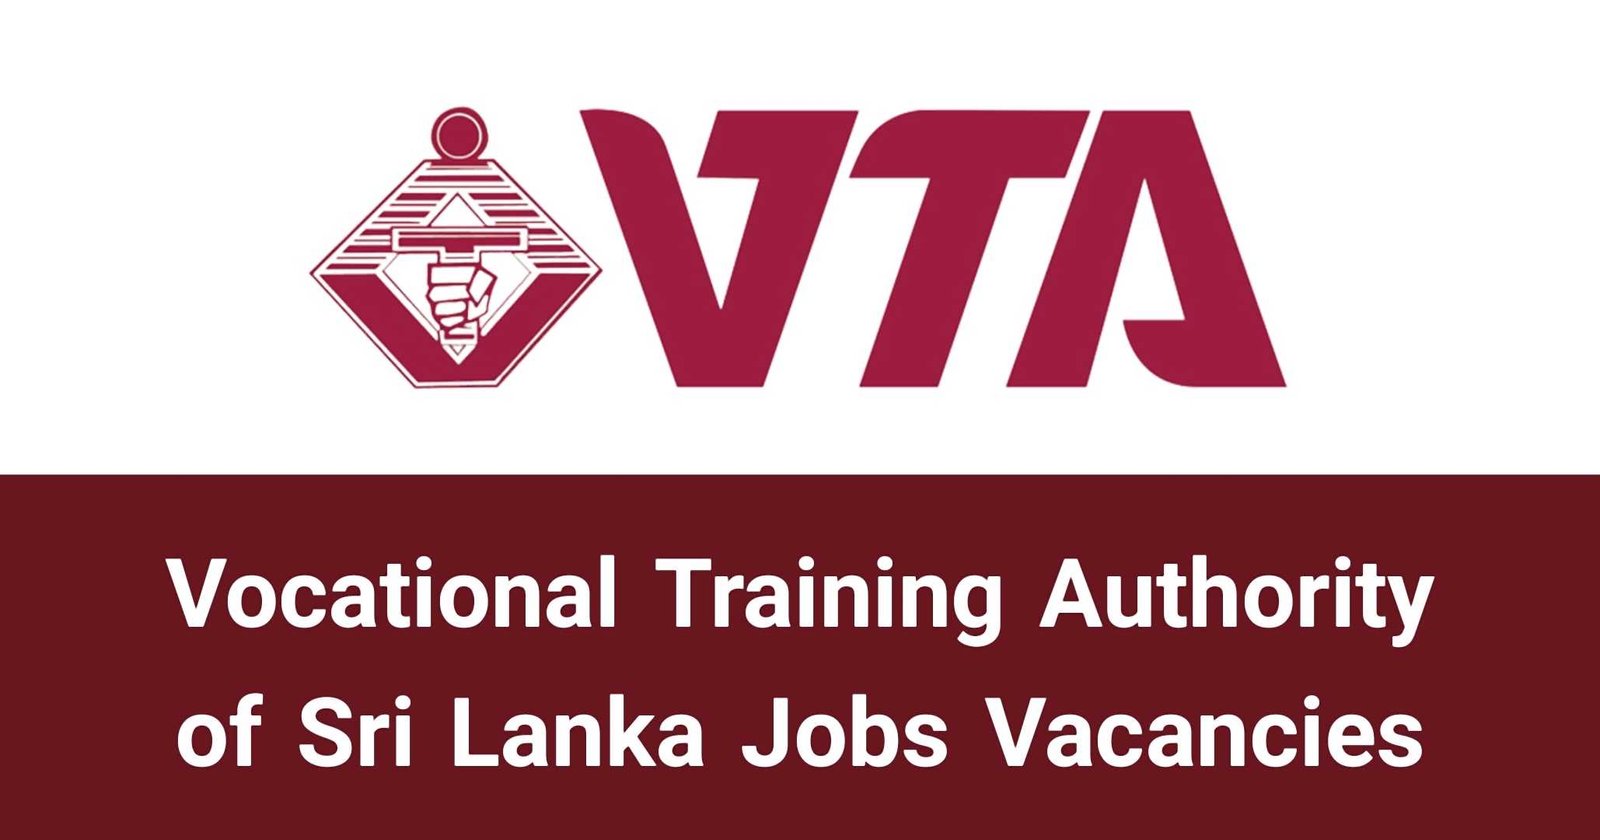 Vocational Training Authority of Sri Lanka Jobs Vacancies Careers